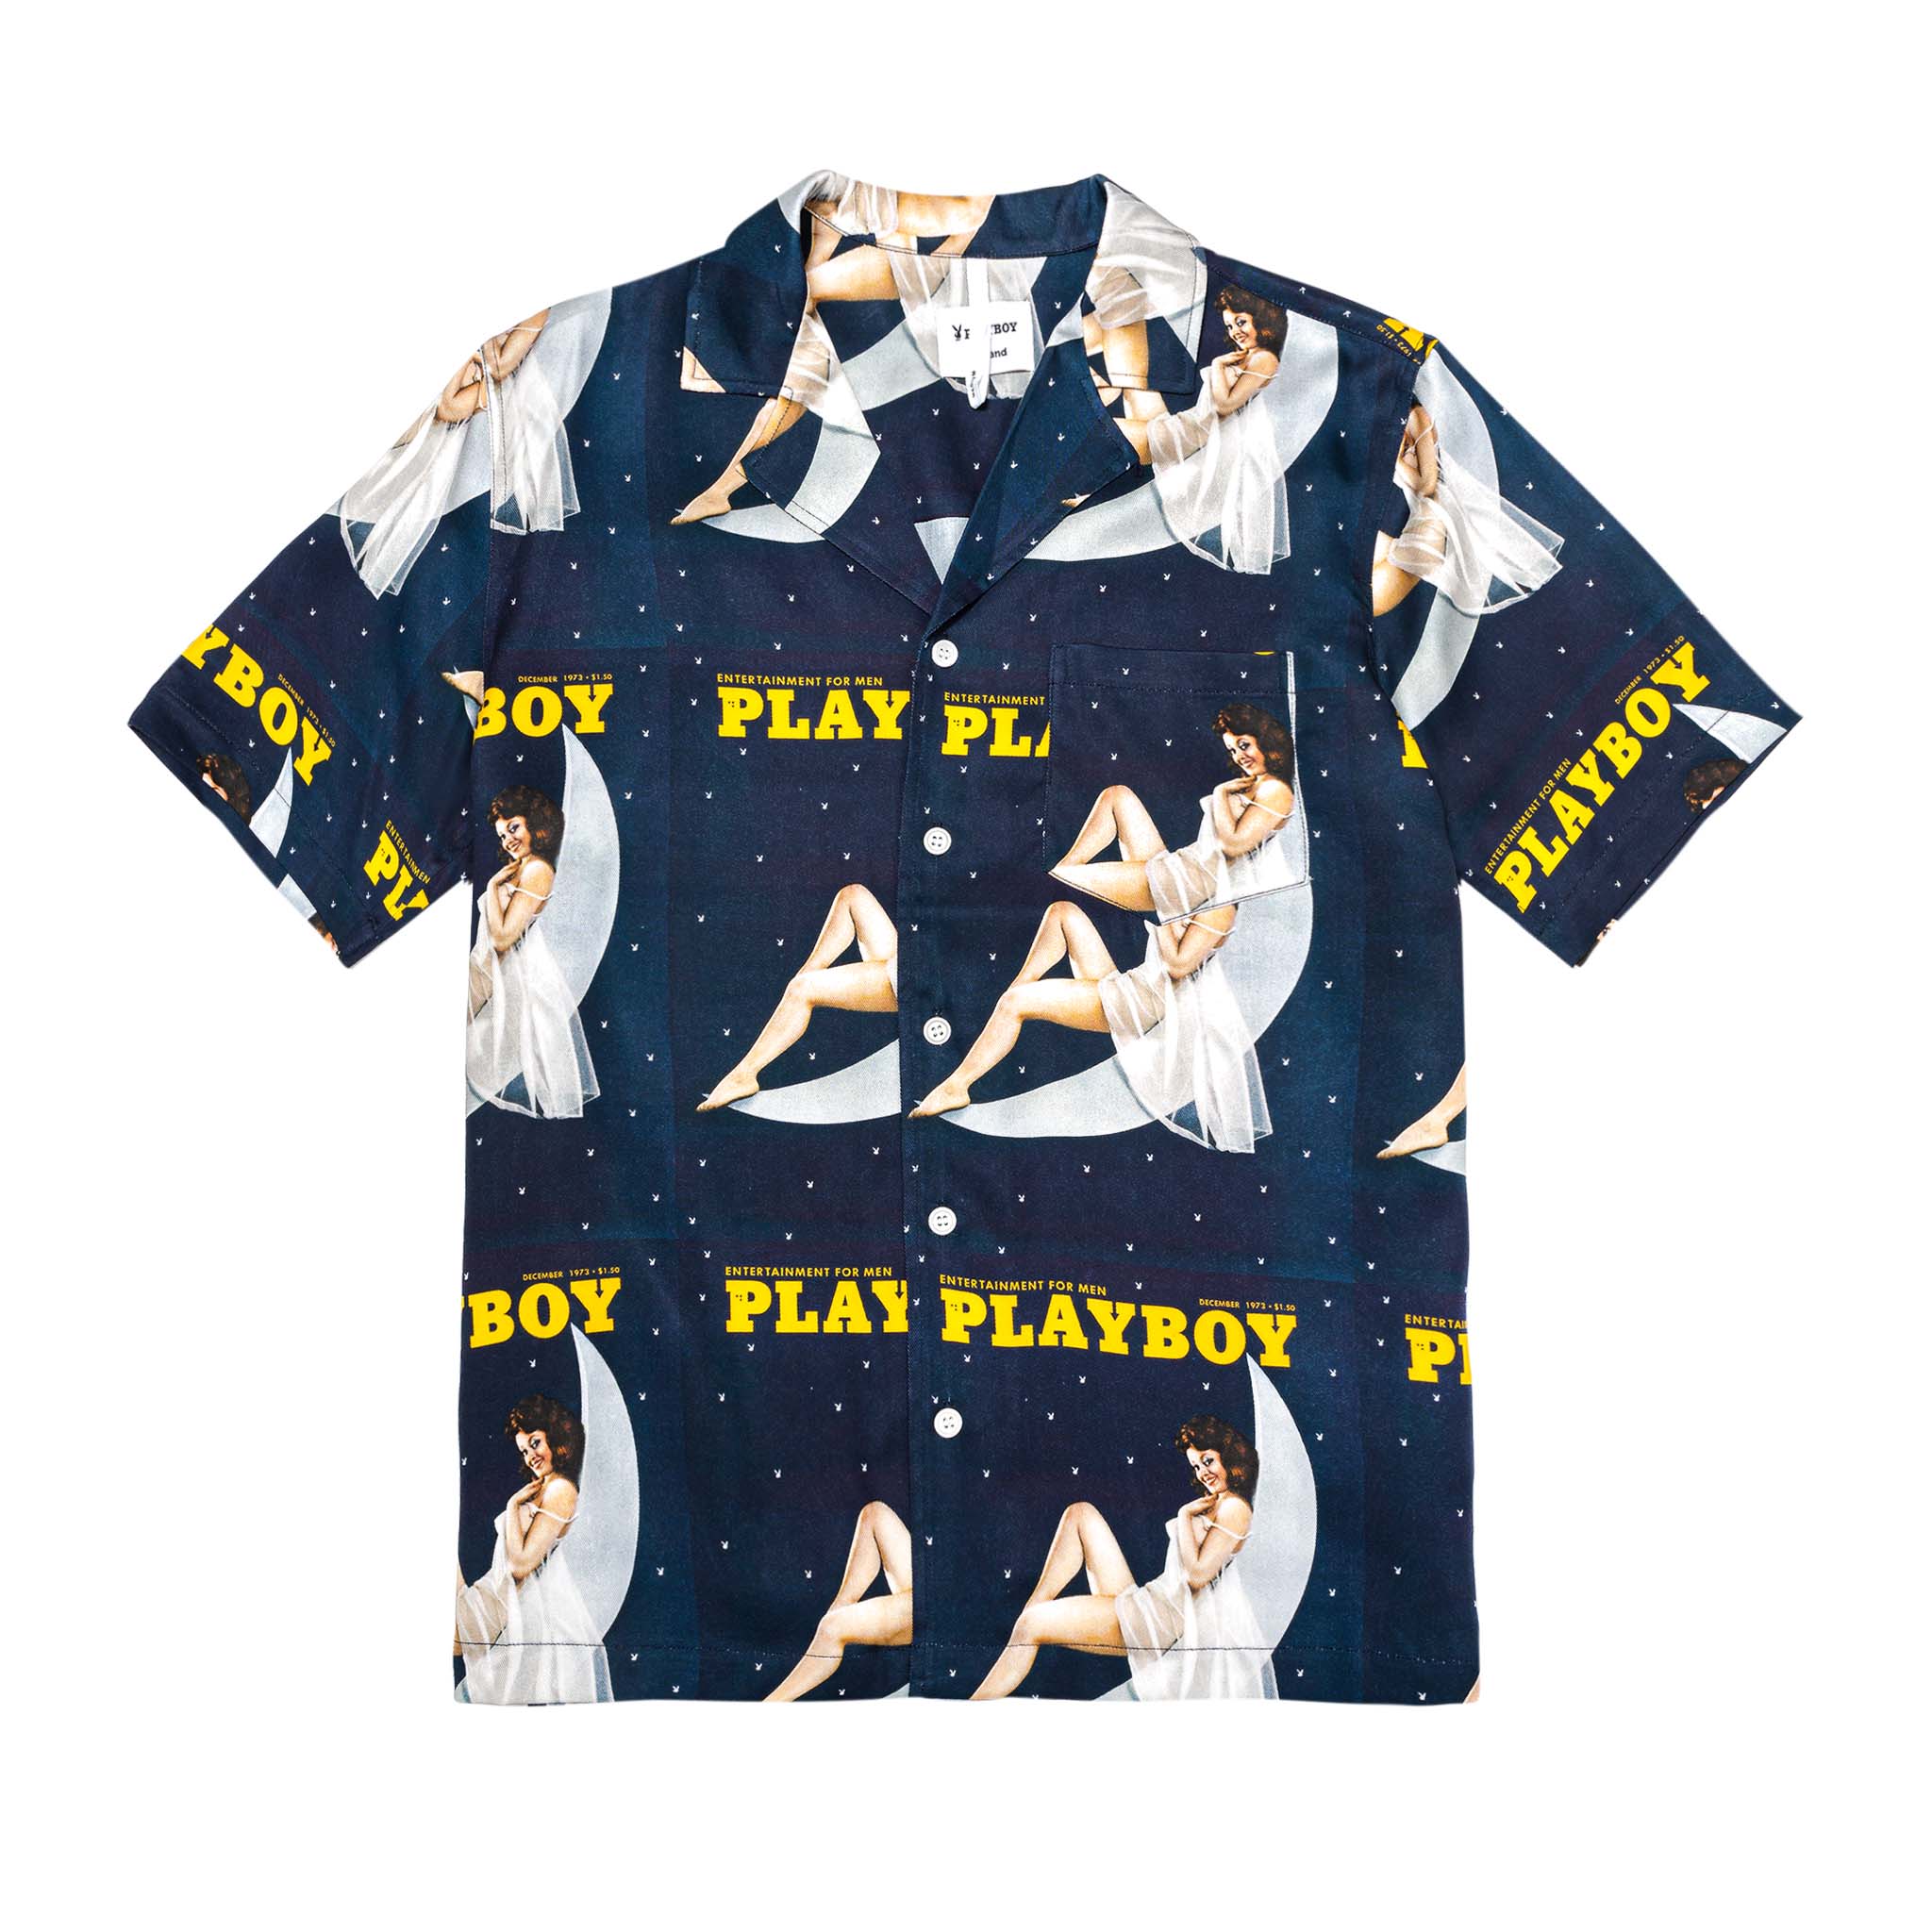 Soulland December 1973 Playboy Camp T-Shirt